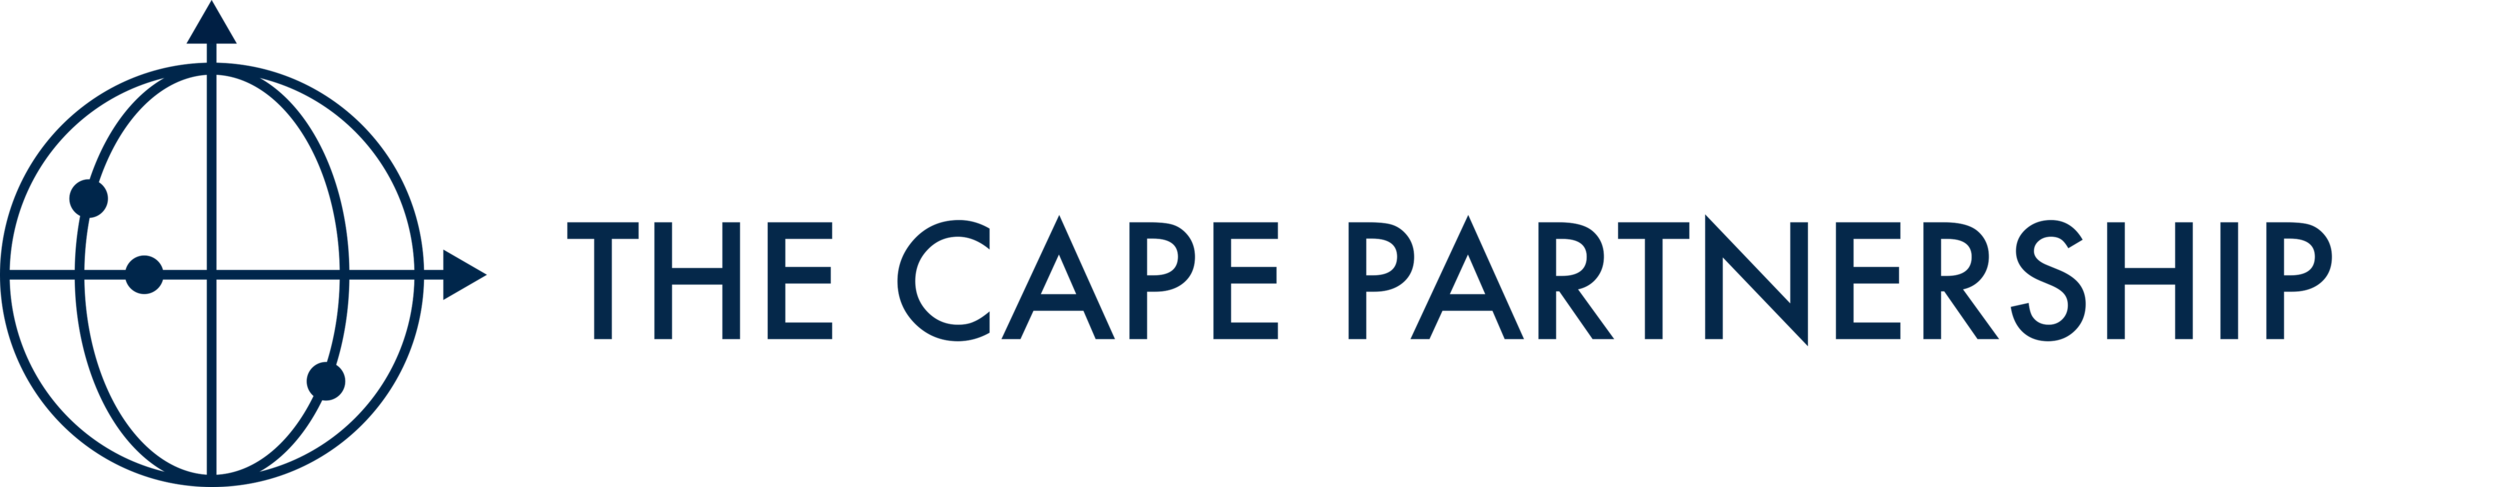 The Cape Partnership